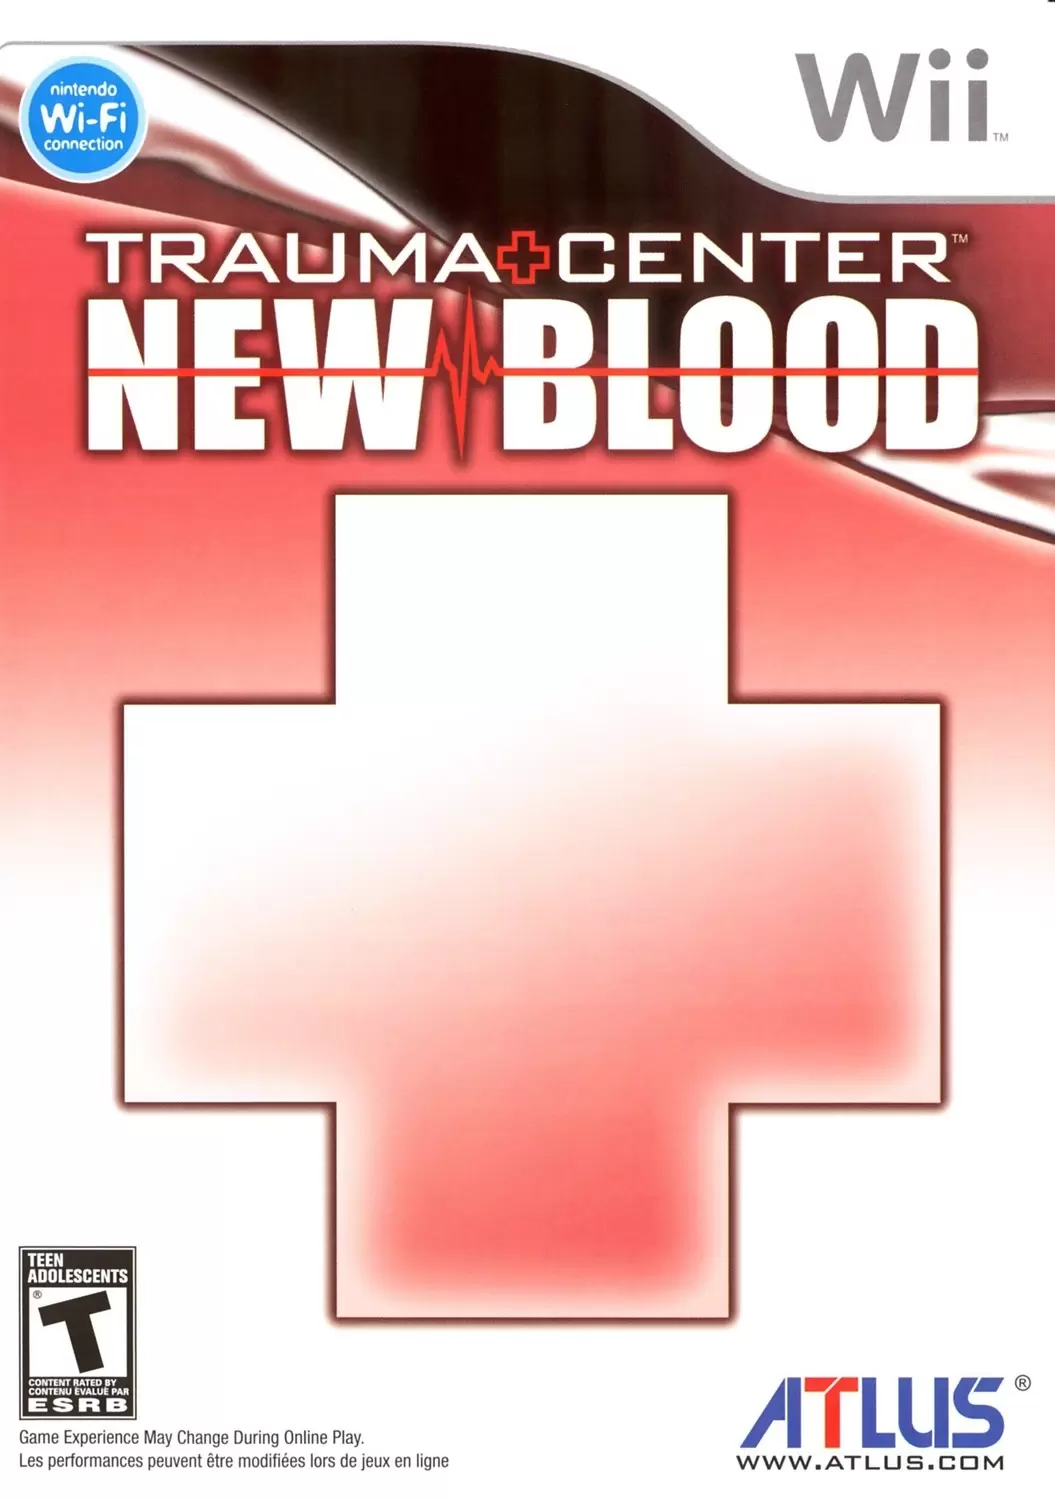 Nintendo Wii Games - Trauma Center: New Blood